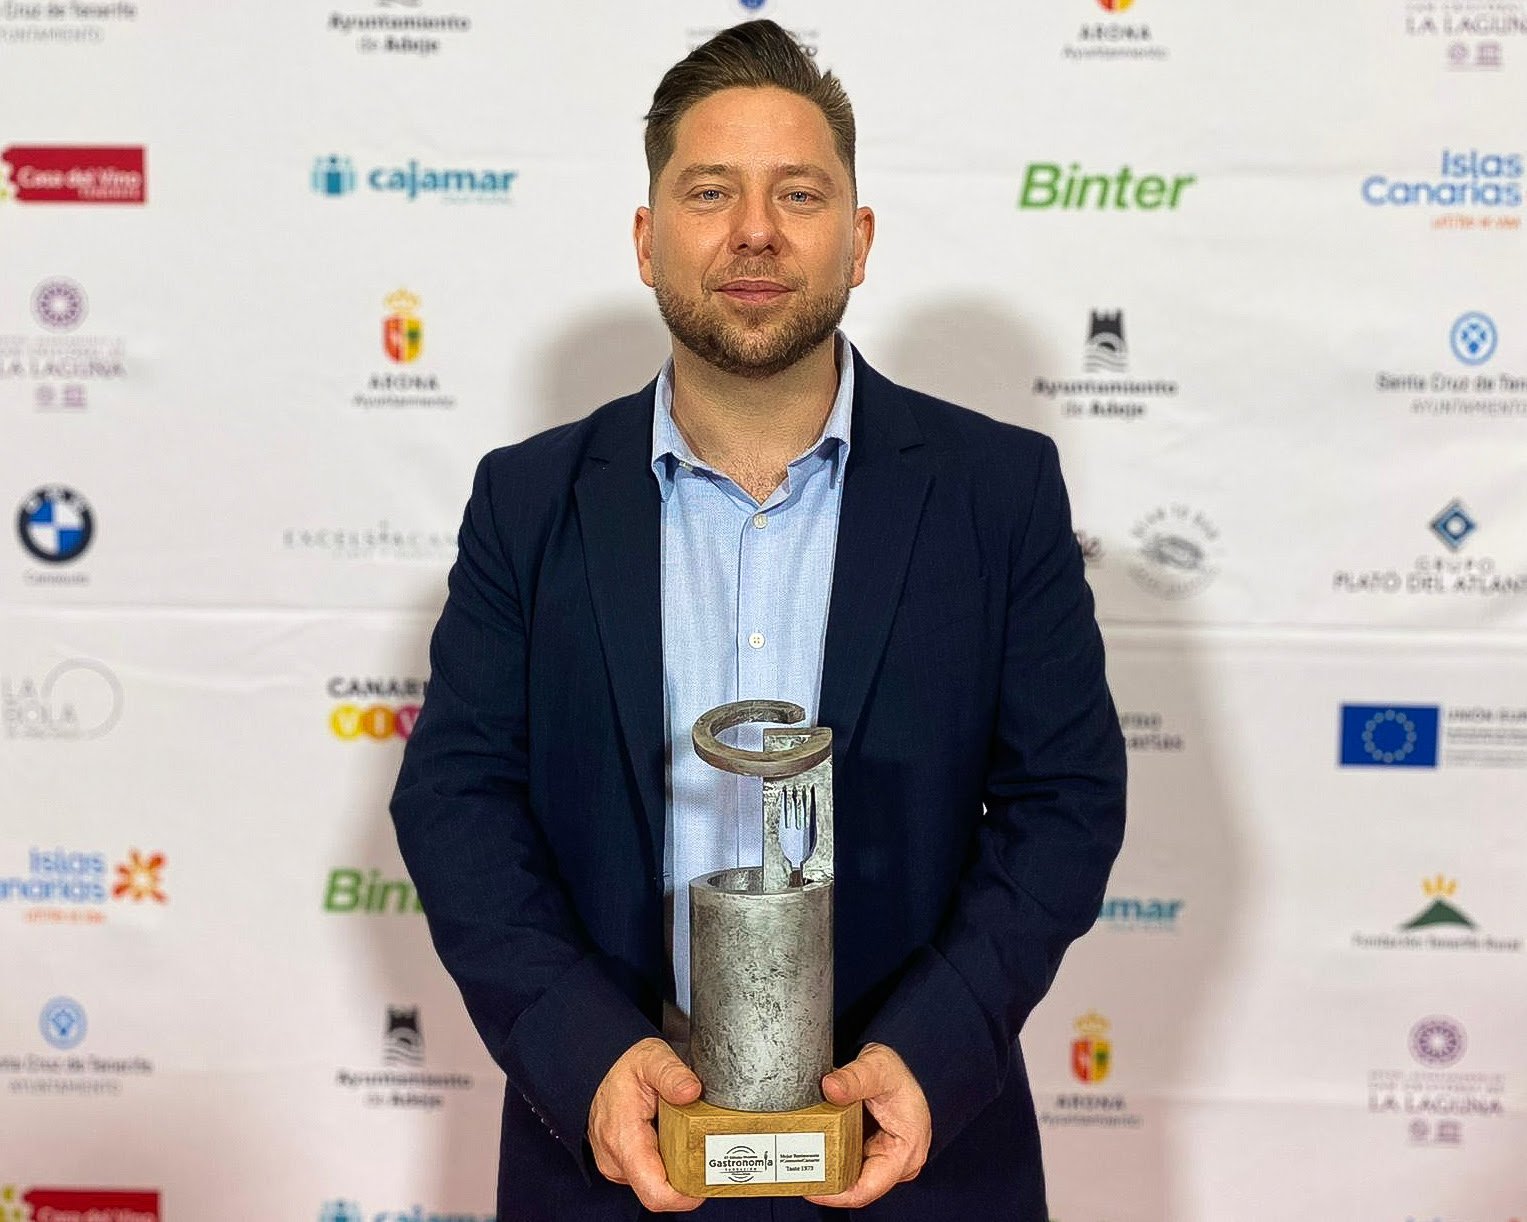 Diego Schattenhofer premio al Mejor Restaurante Consume Canario 2022